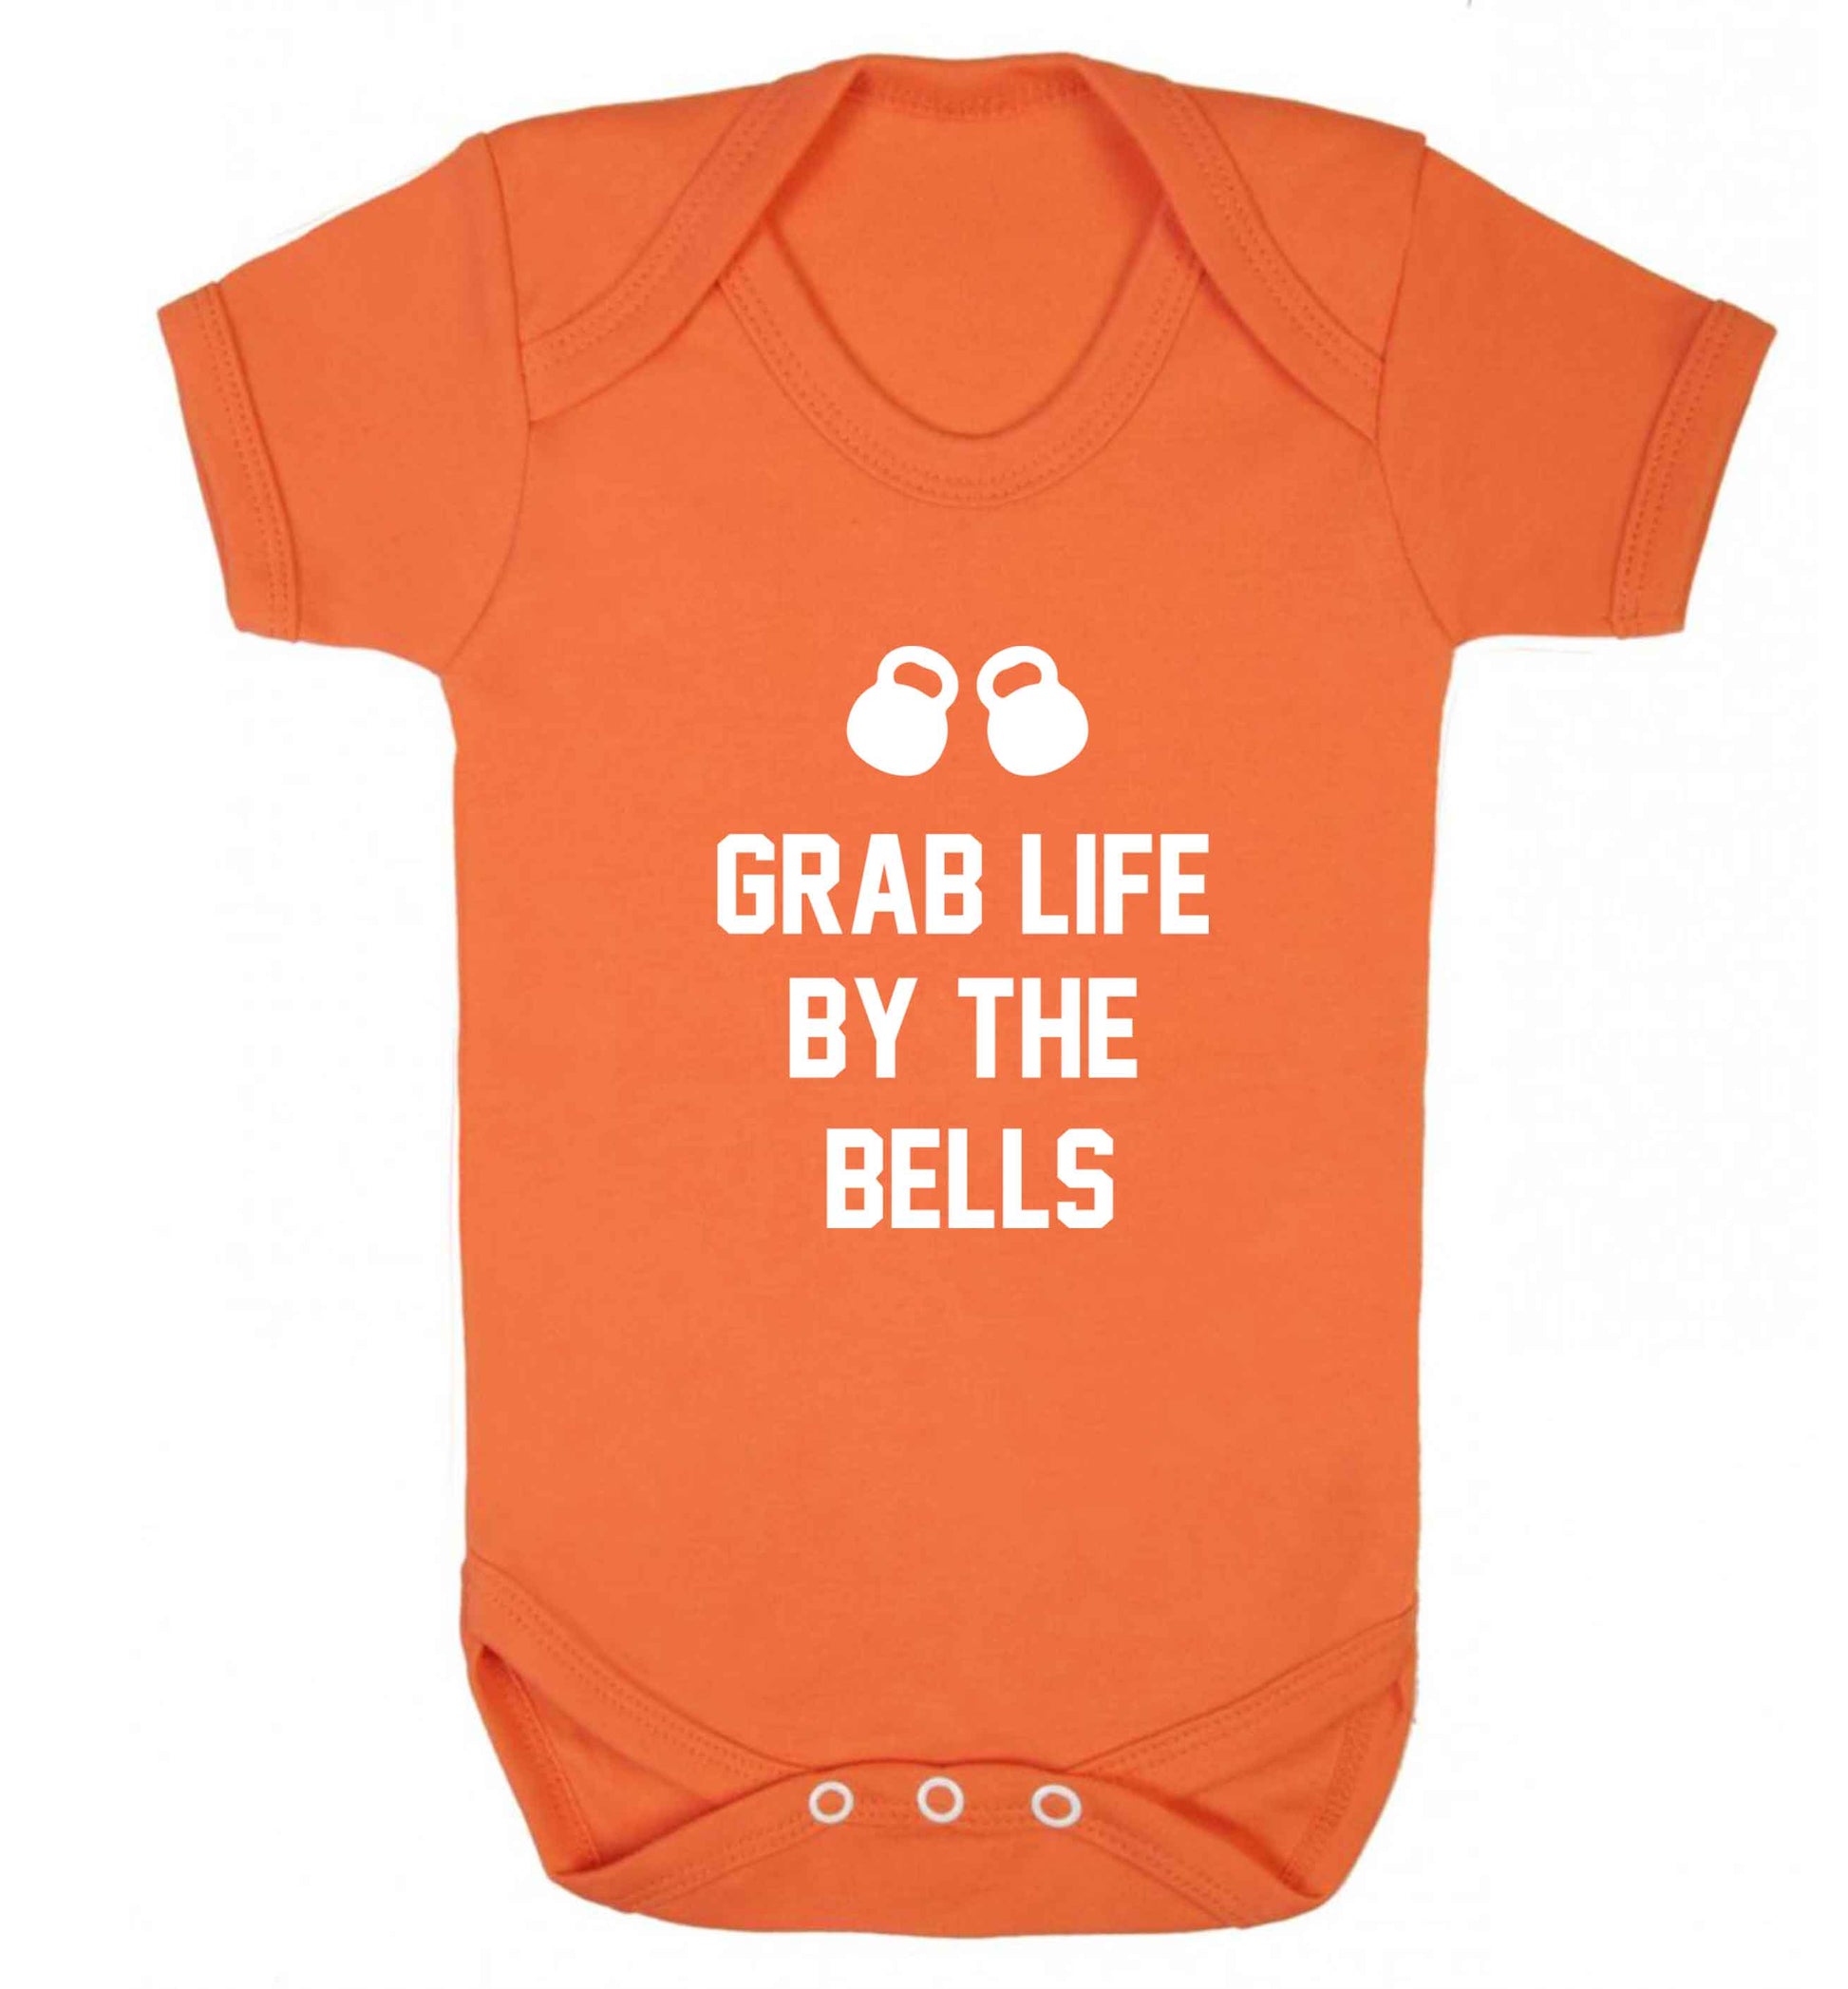 Grab life by the bells baby vest orange 18-24 months